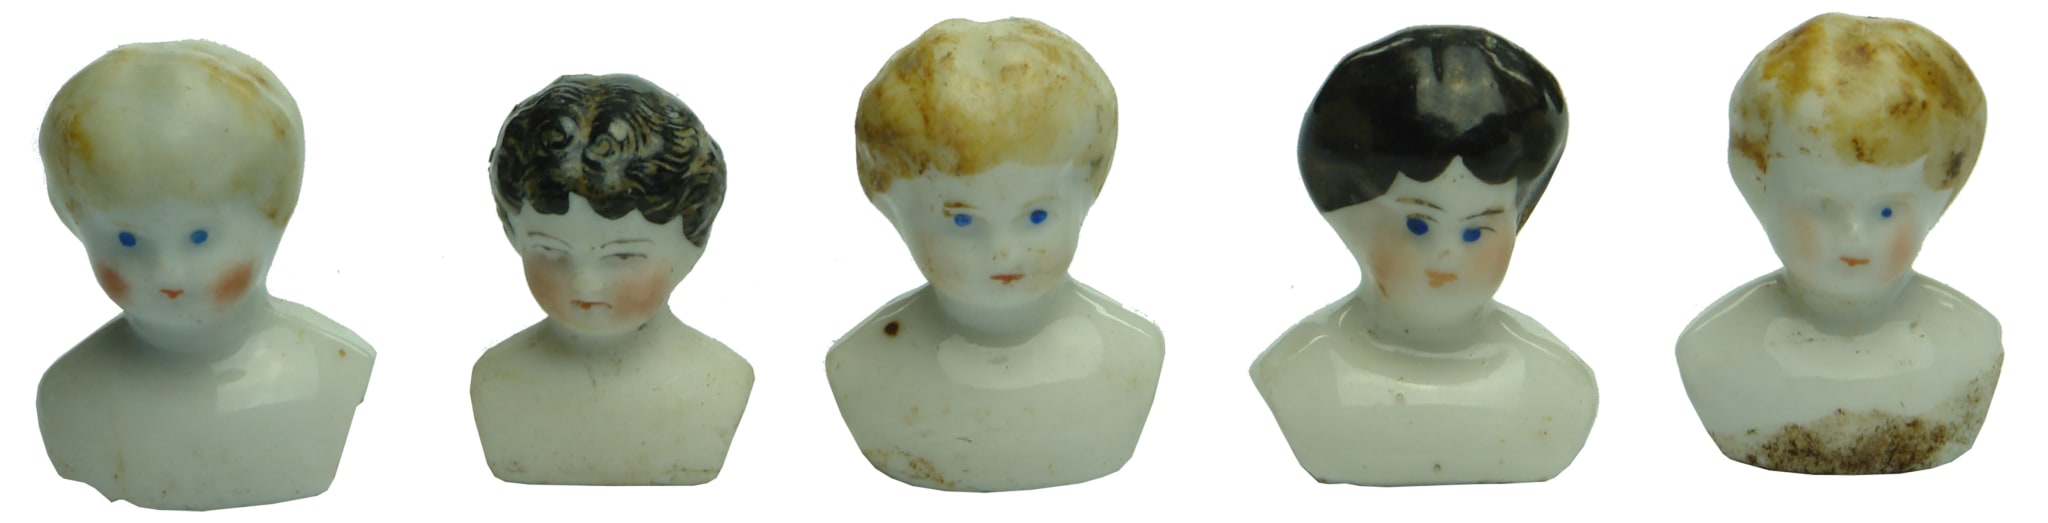 Five small Ceramic Dolls Heads